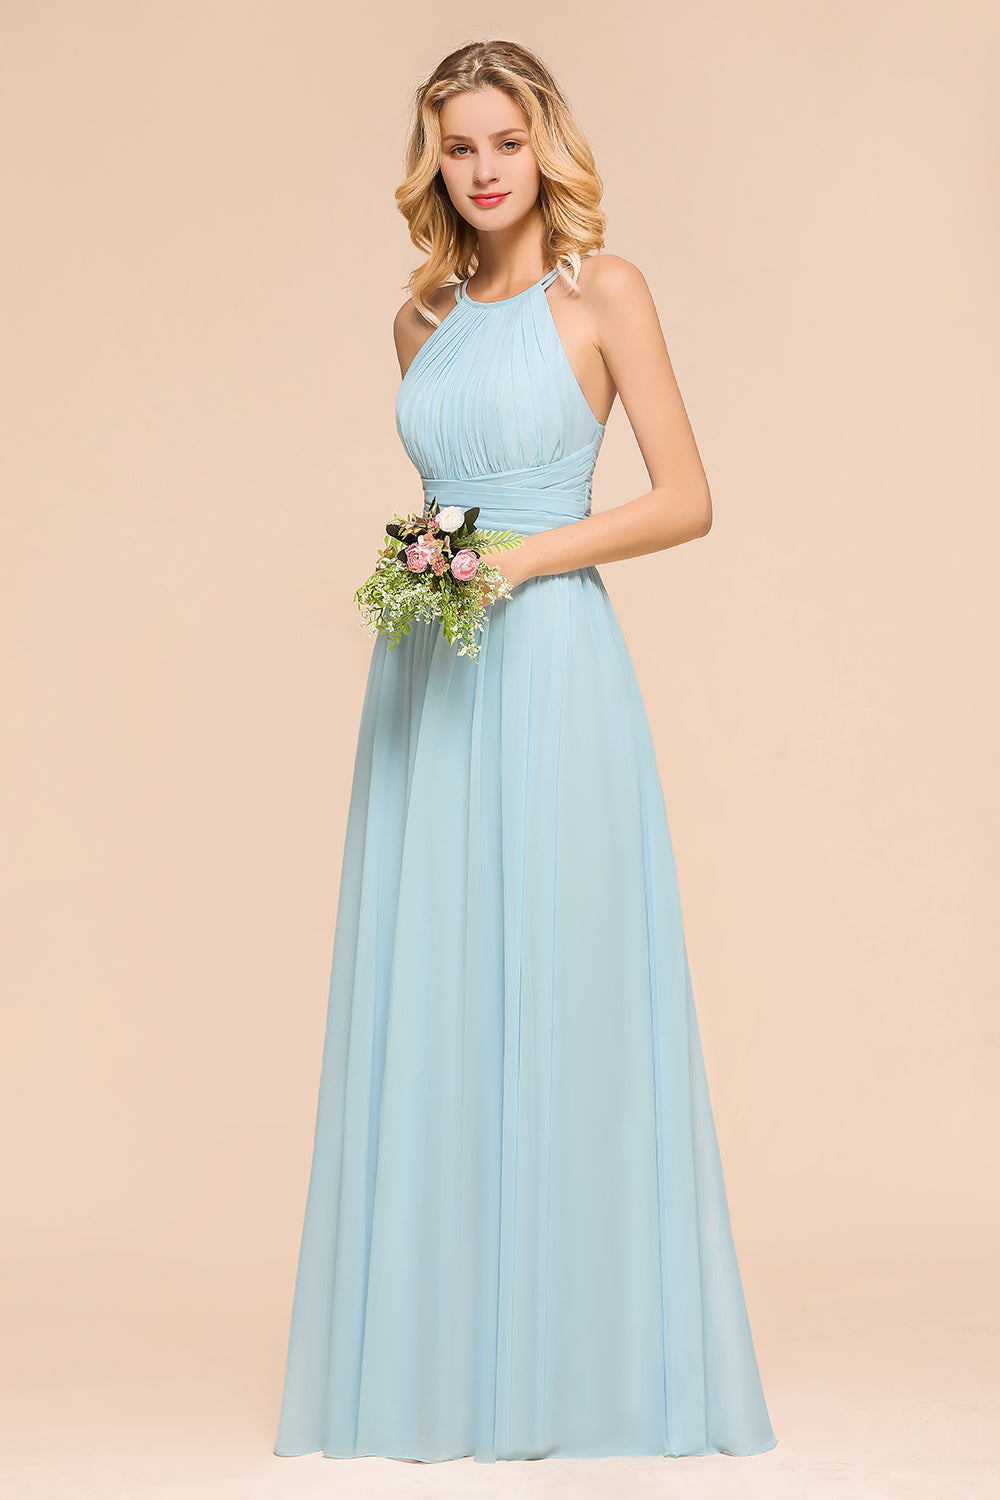 Gorgeous Halter Ruffle Sky Blue Affordable Bridesmaid Dress